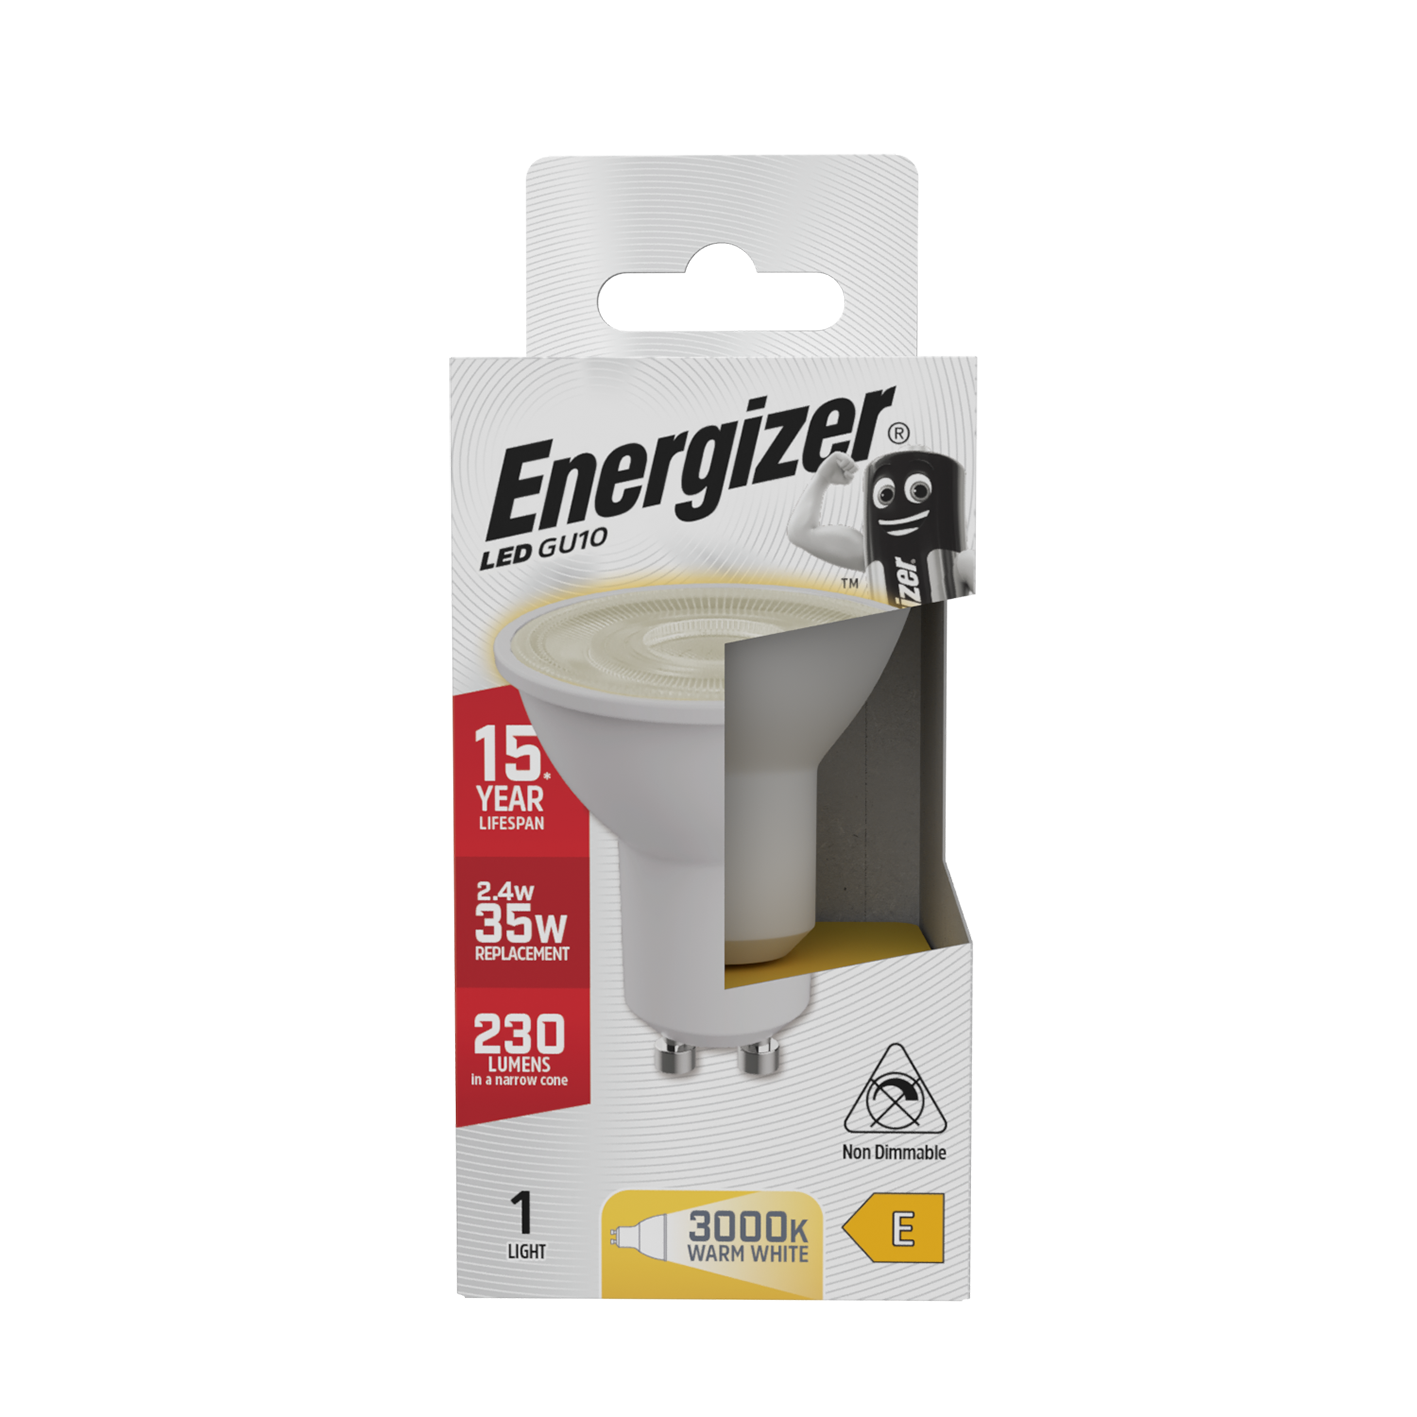 Energizer LED GU10 230 Lumens 2.4W 3,000K (Warm White), Box of 1